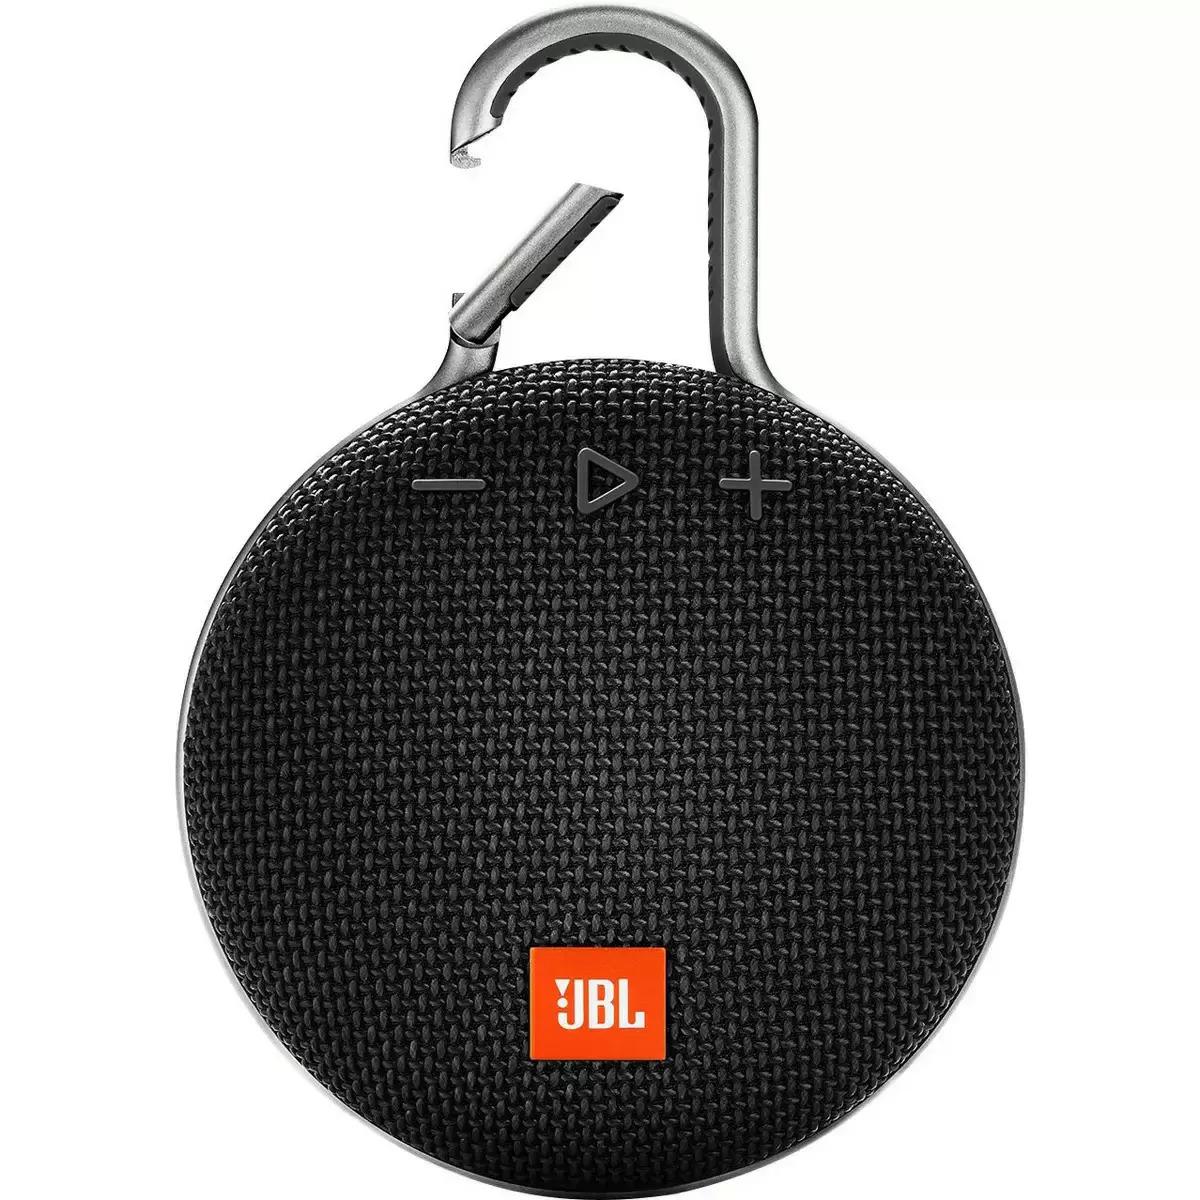 JBL CLIP 3 Waterproof Portable Bluetooth Speaker for $39.95 Shipped